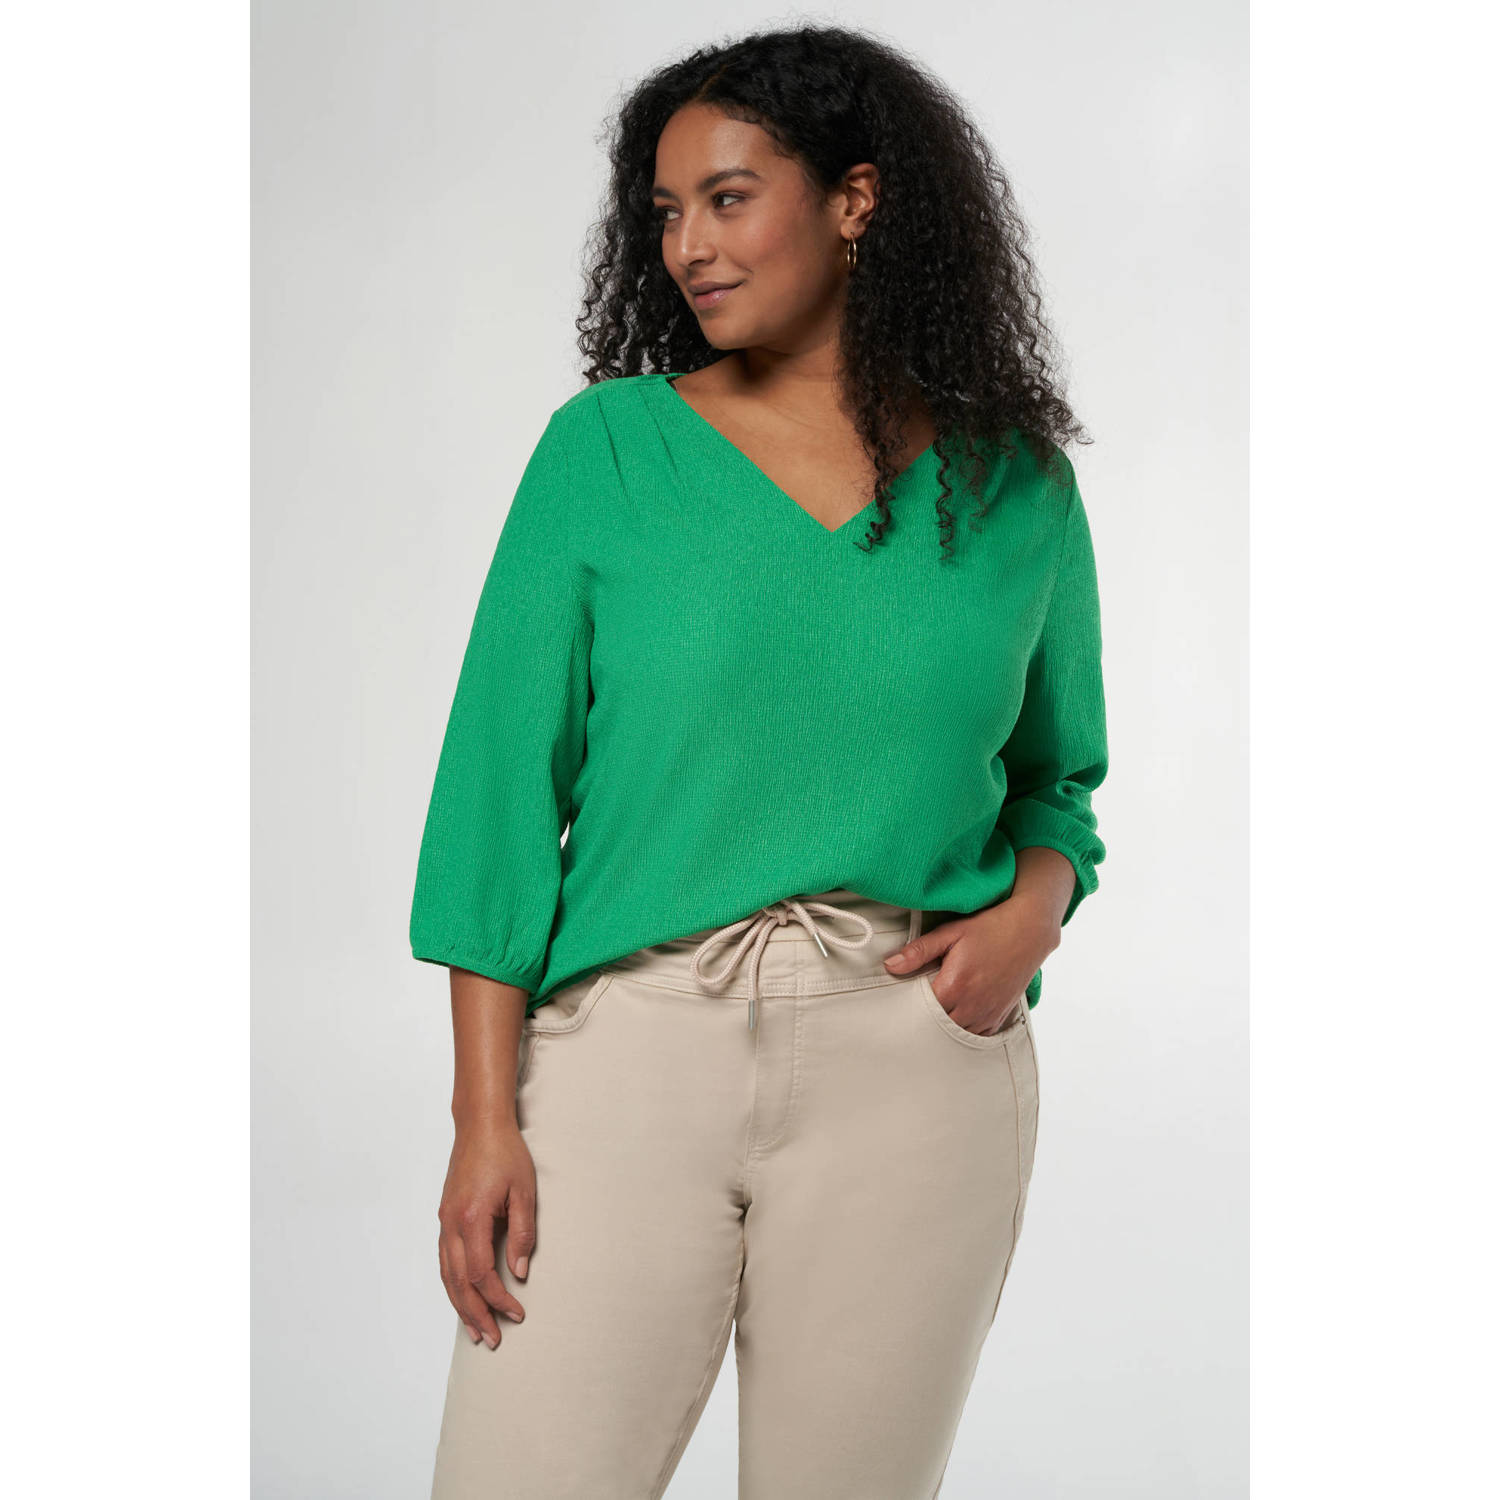 MS Mode blousetop groen